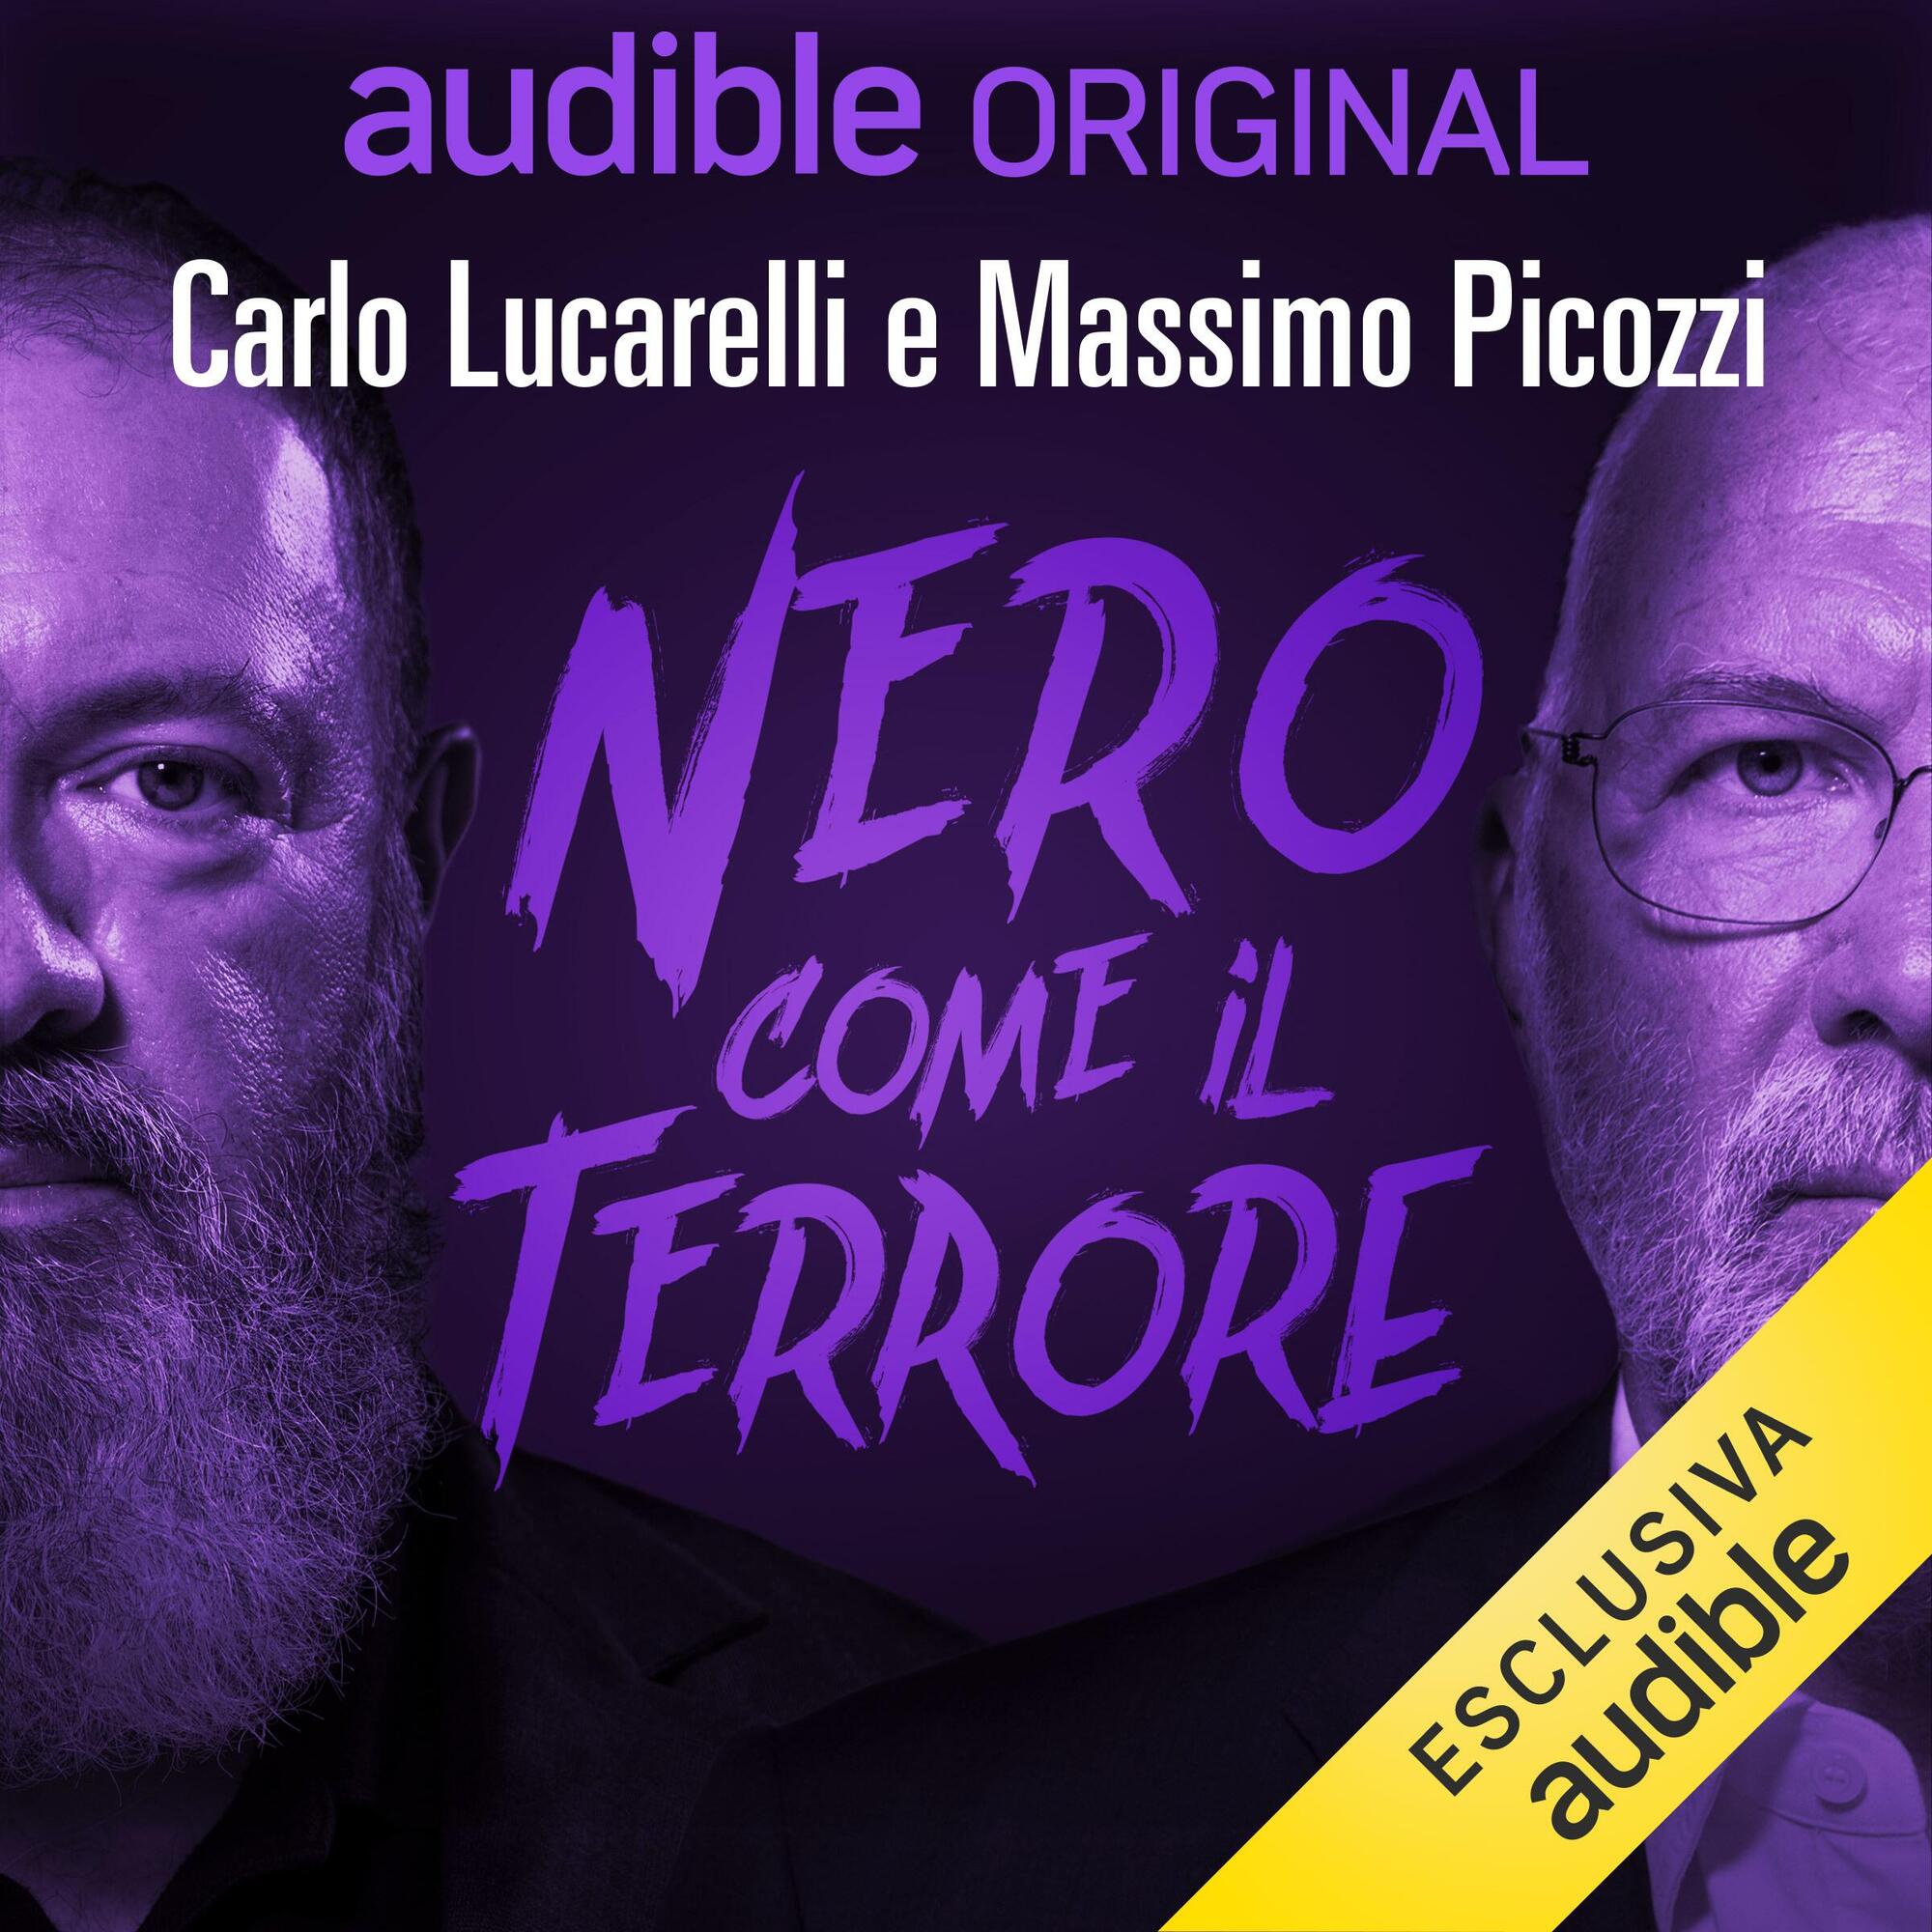 Carlo Lucarelli e Massimo Picozzi